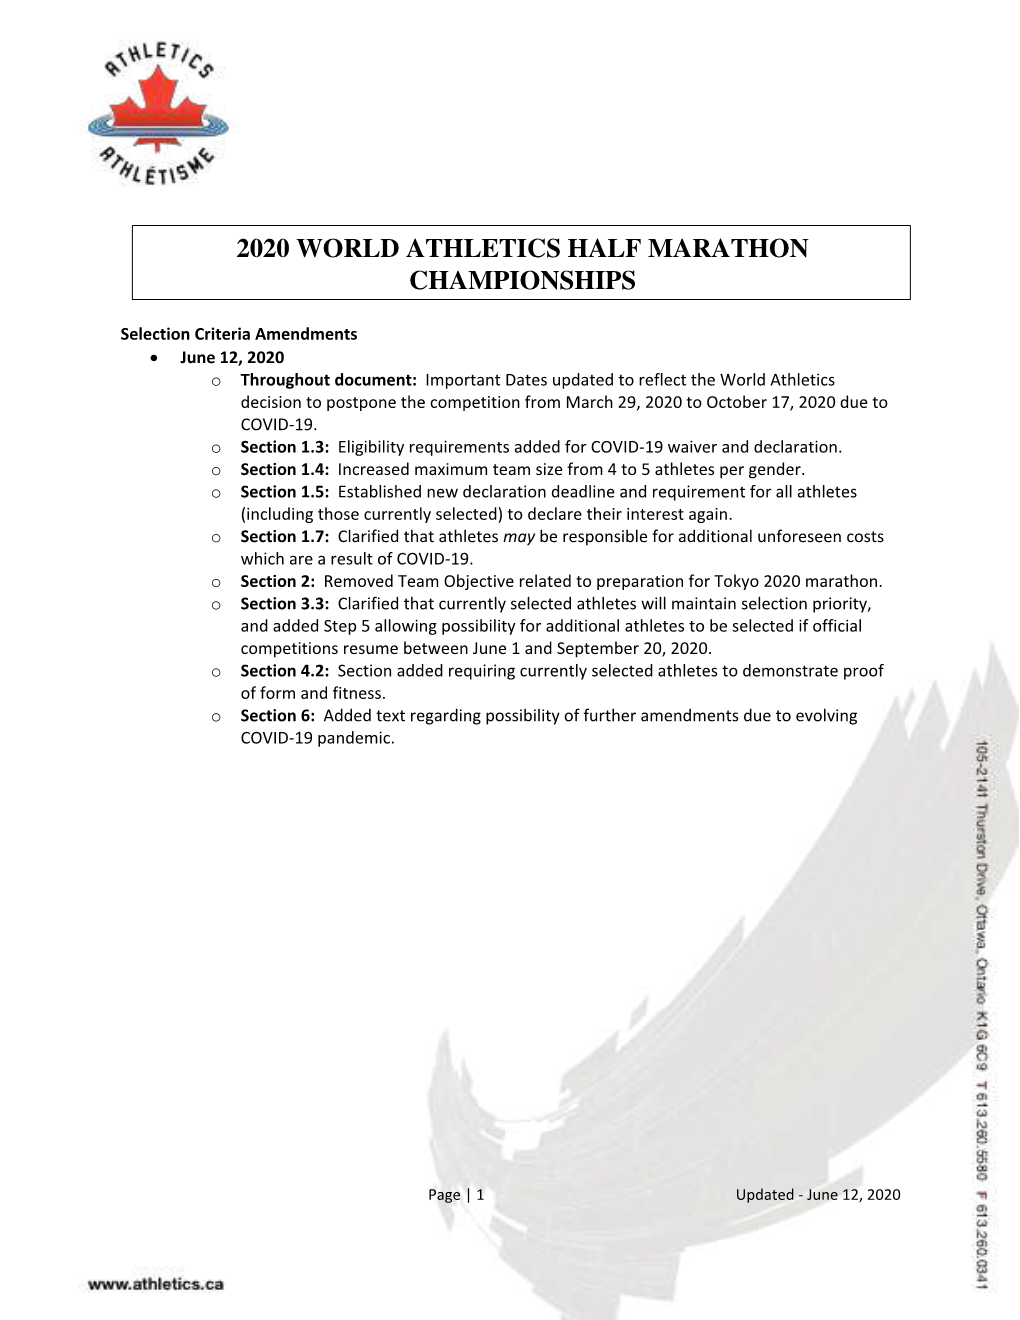 2020 World Athletics Half Marathon Championships